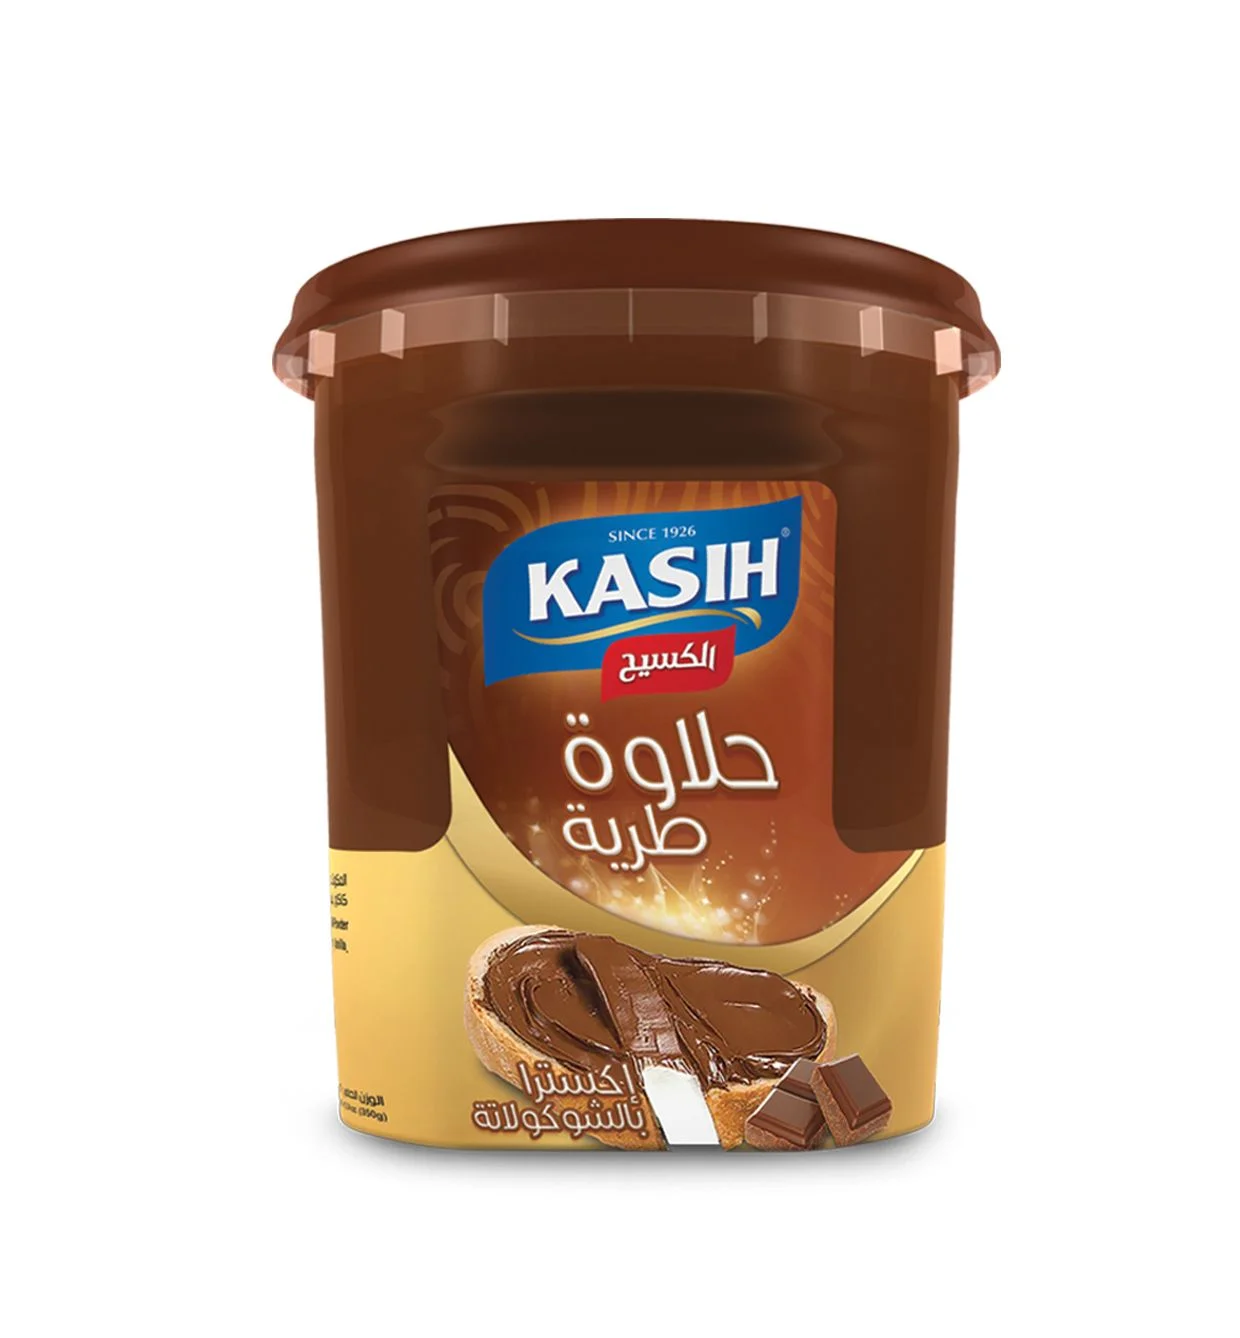 KASIH Halva Spread With Chocolate